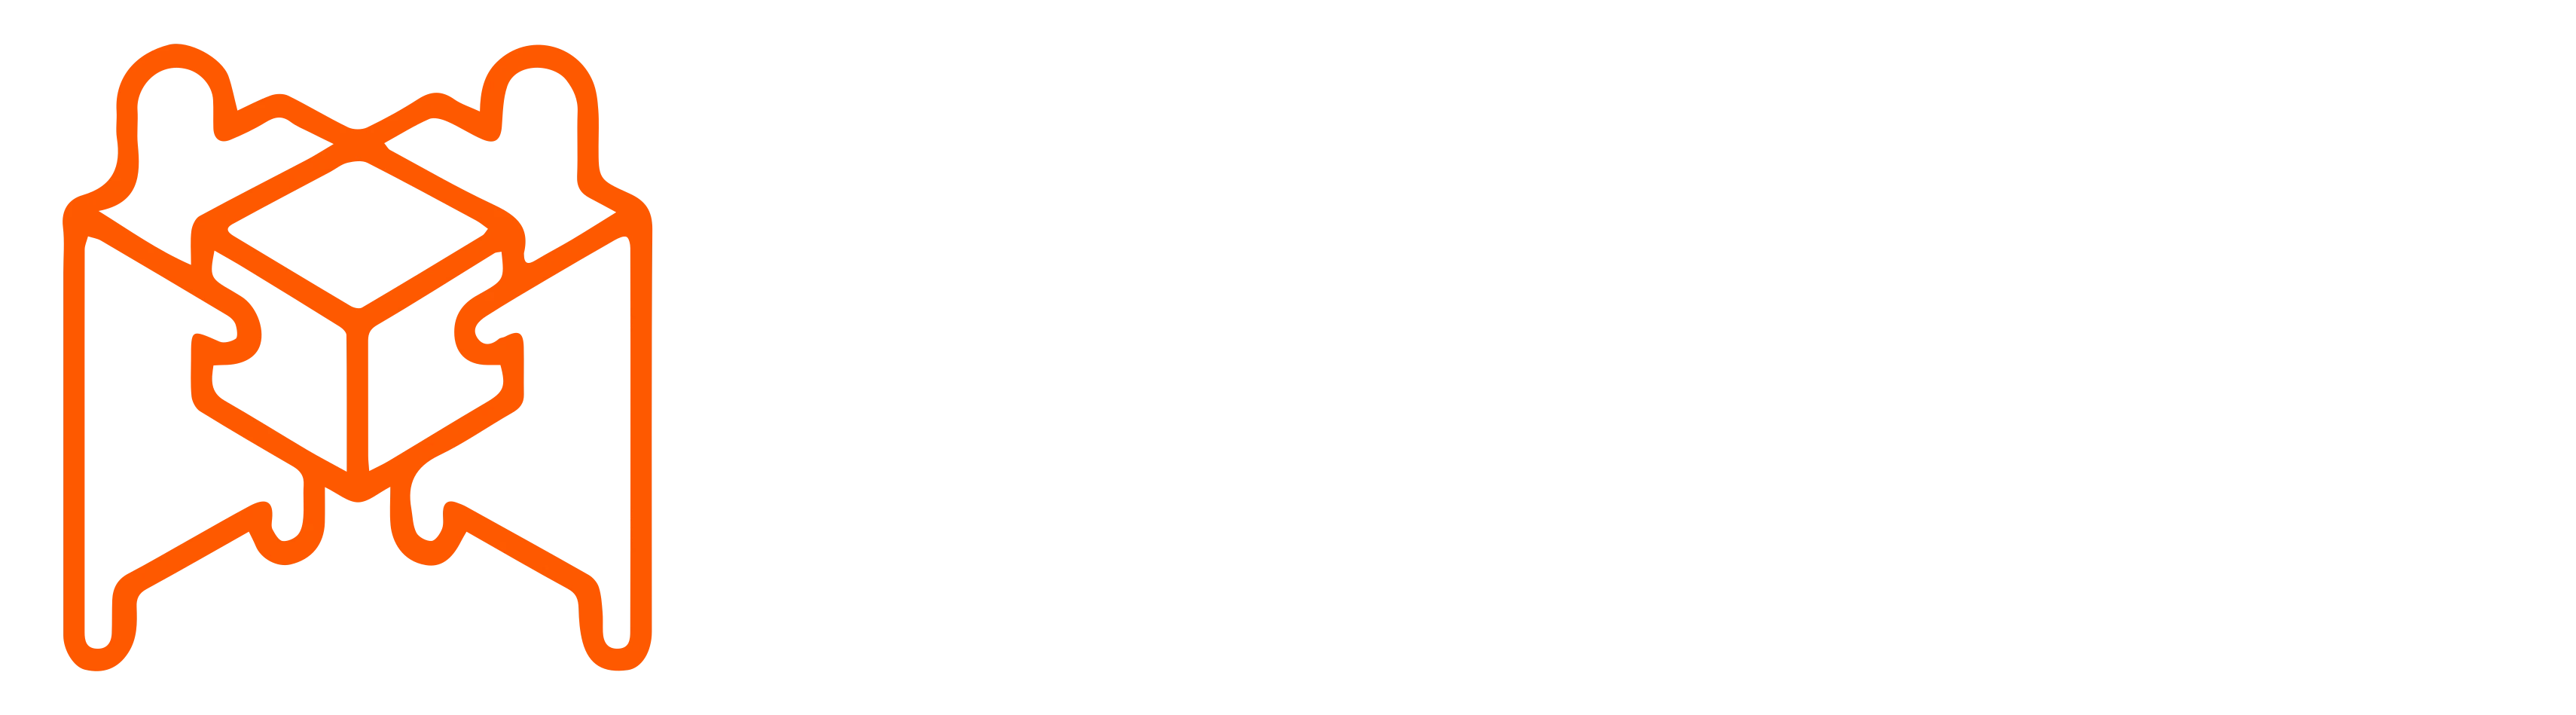 Muvit Logo